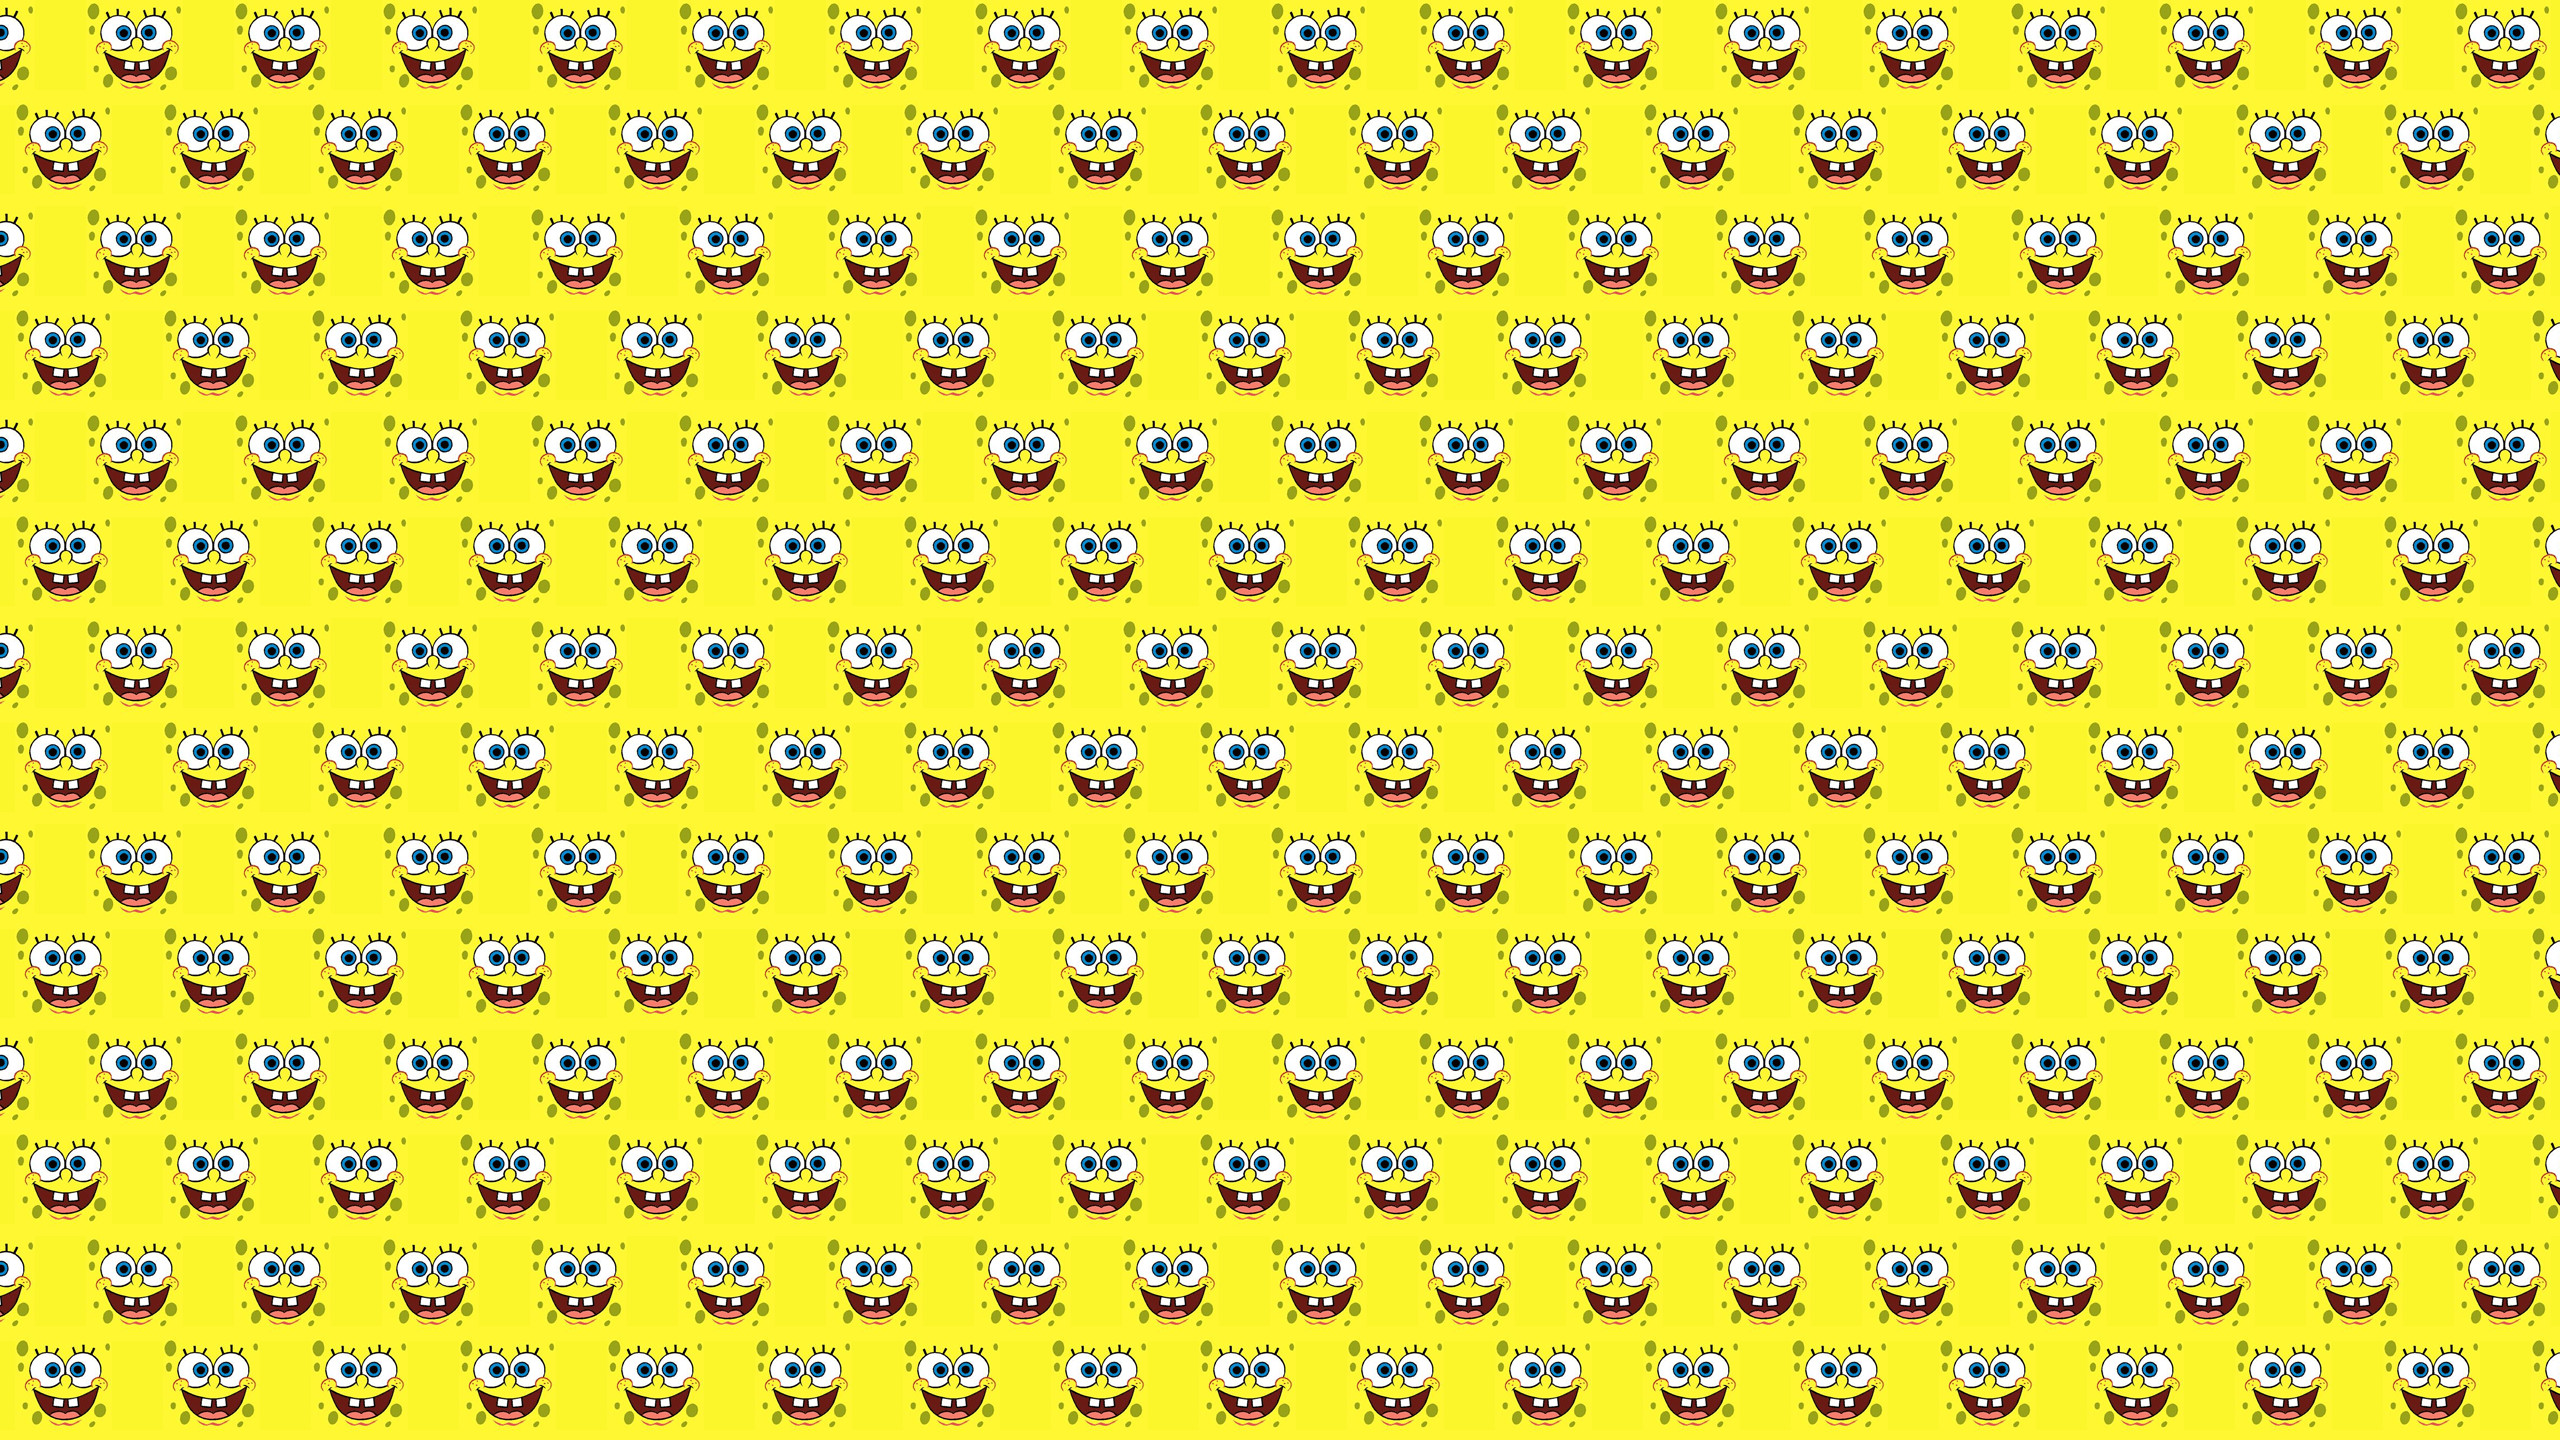 2560x1440 SpongeBob SquarePants pattern wallpaper